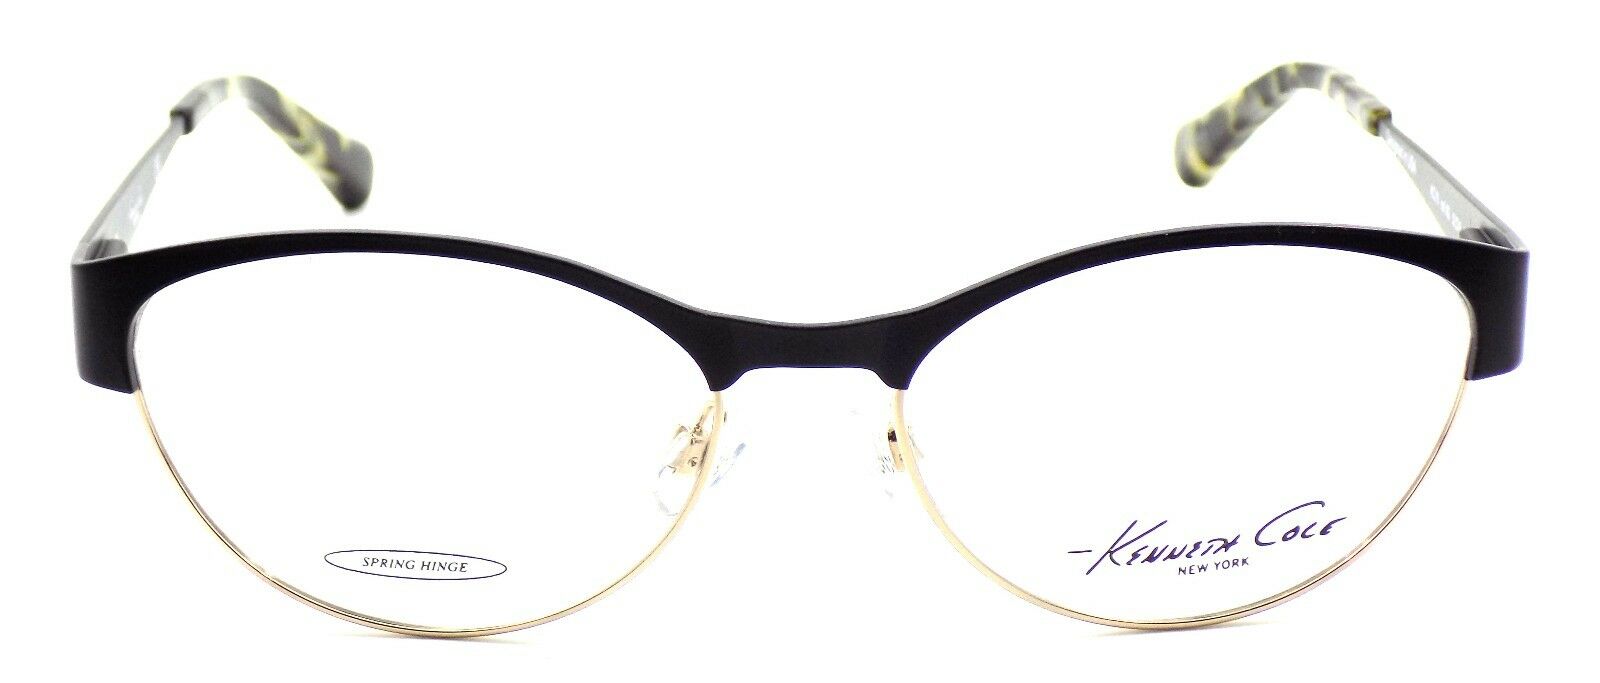 2-Kenneth Cole NY KC215 002 Women's Eyeglasses Frames 52-16-135 Matte Black-664689630745-IKSpecs